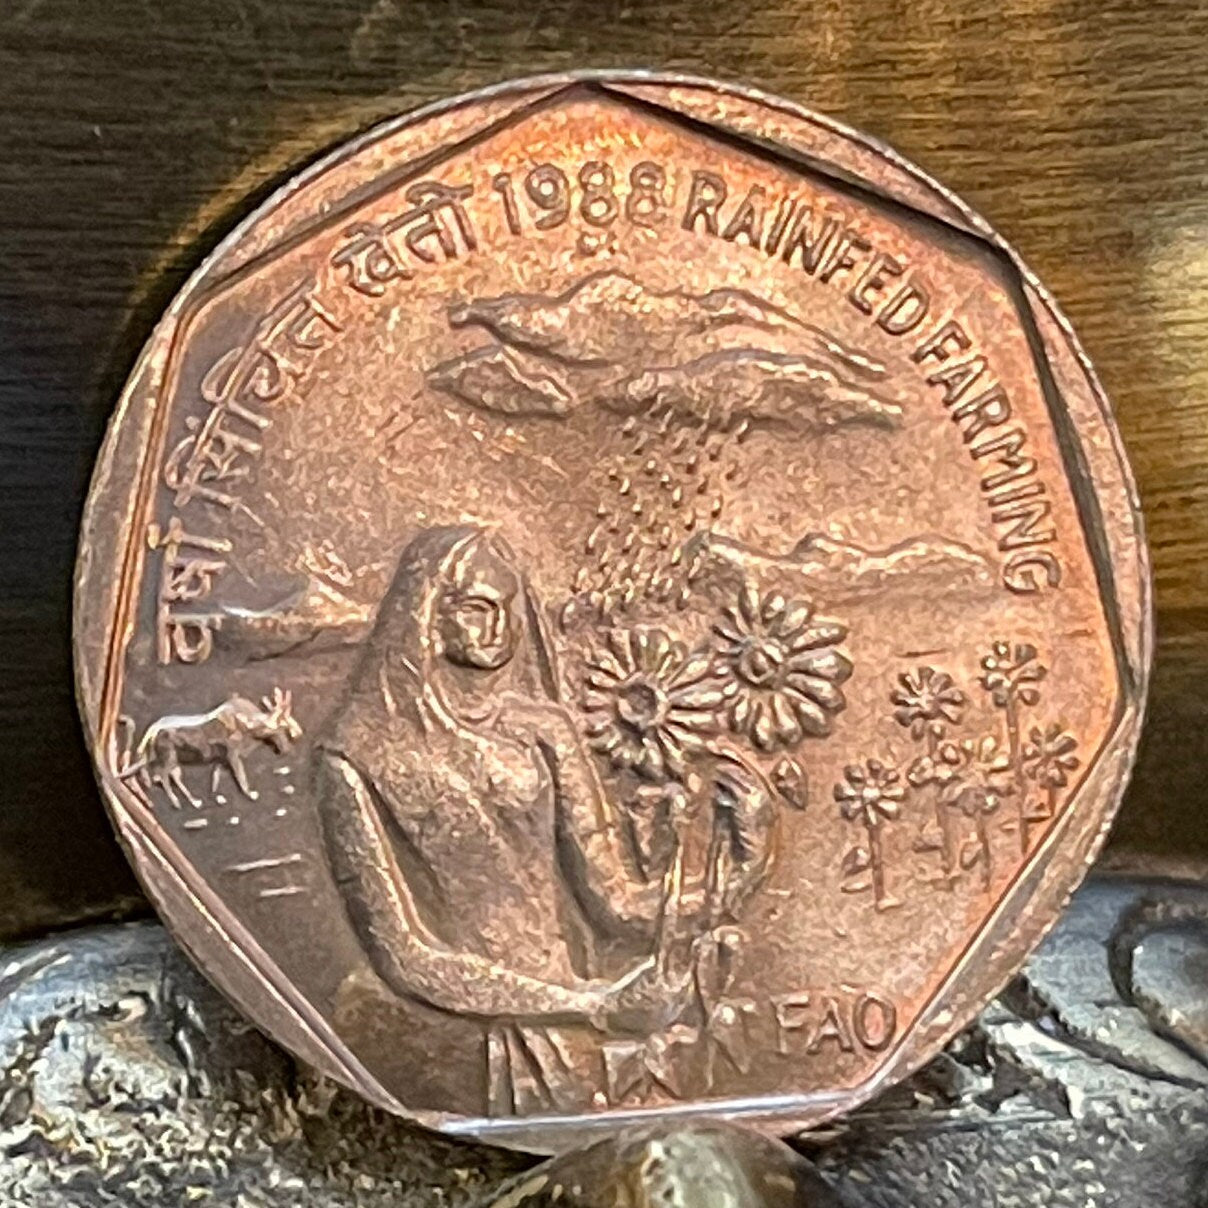 Ashoka Lion Capitol 1 Rupee India Authentic Coin Money for Jewelry and Craft Making (Rainfed Farming) FAO